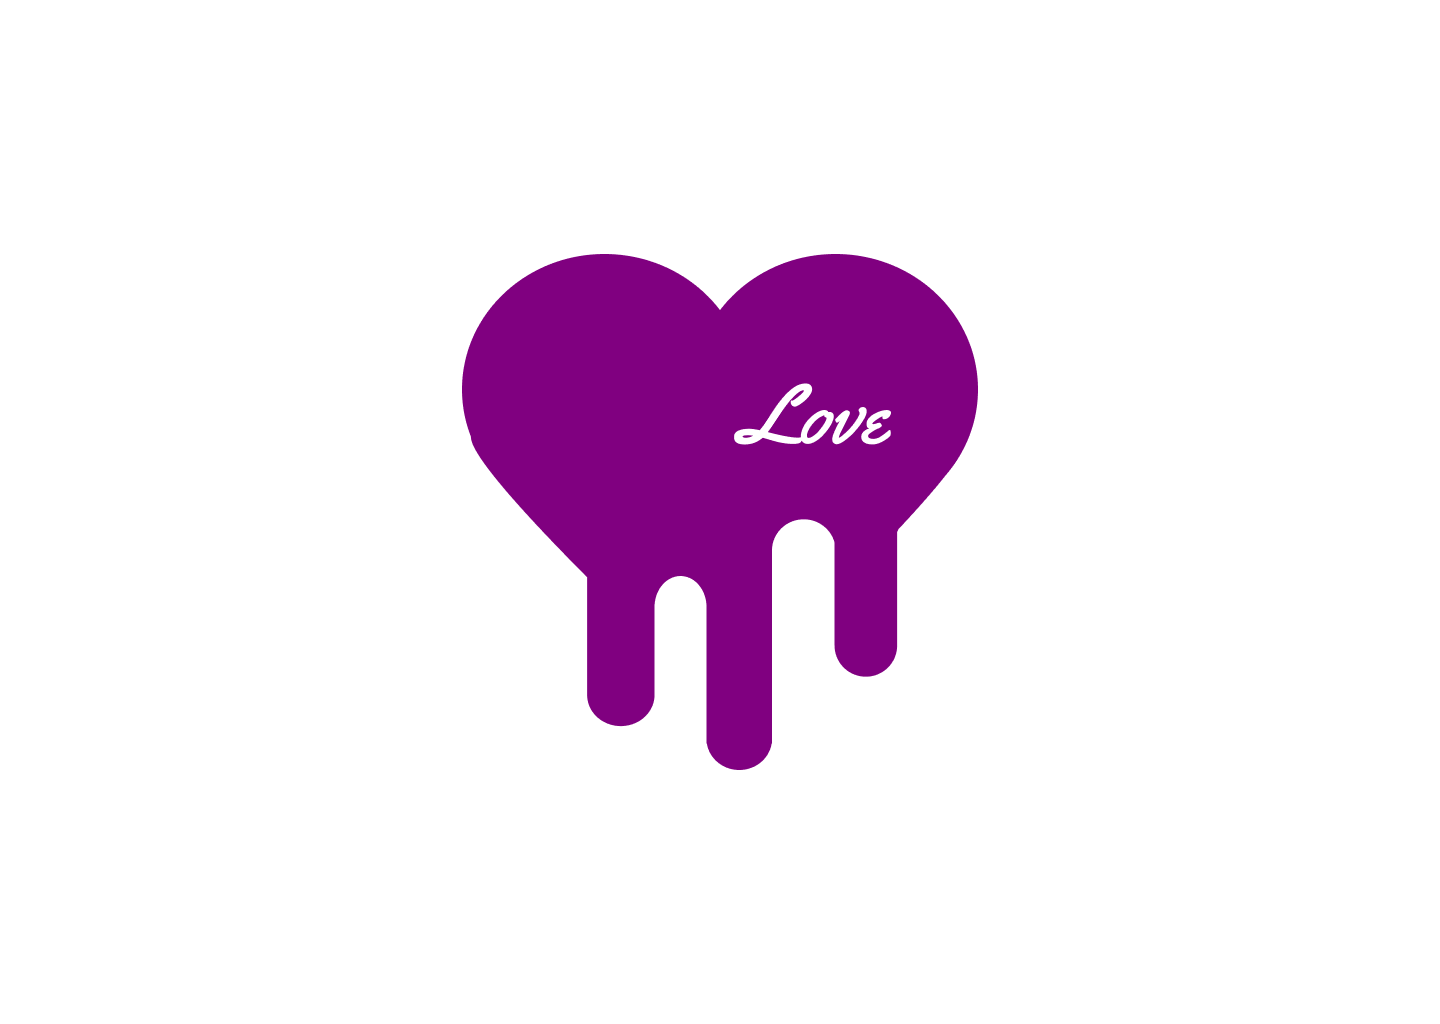 shirts And merchandise– PurpleLove